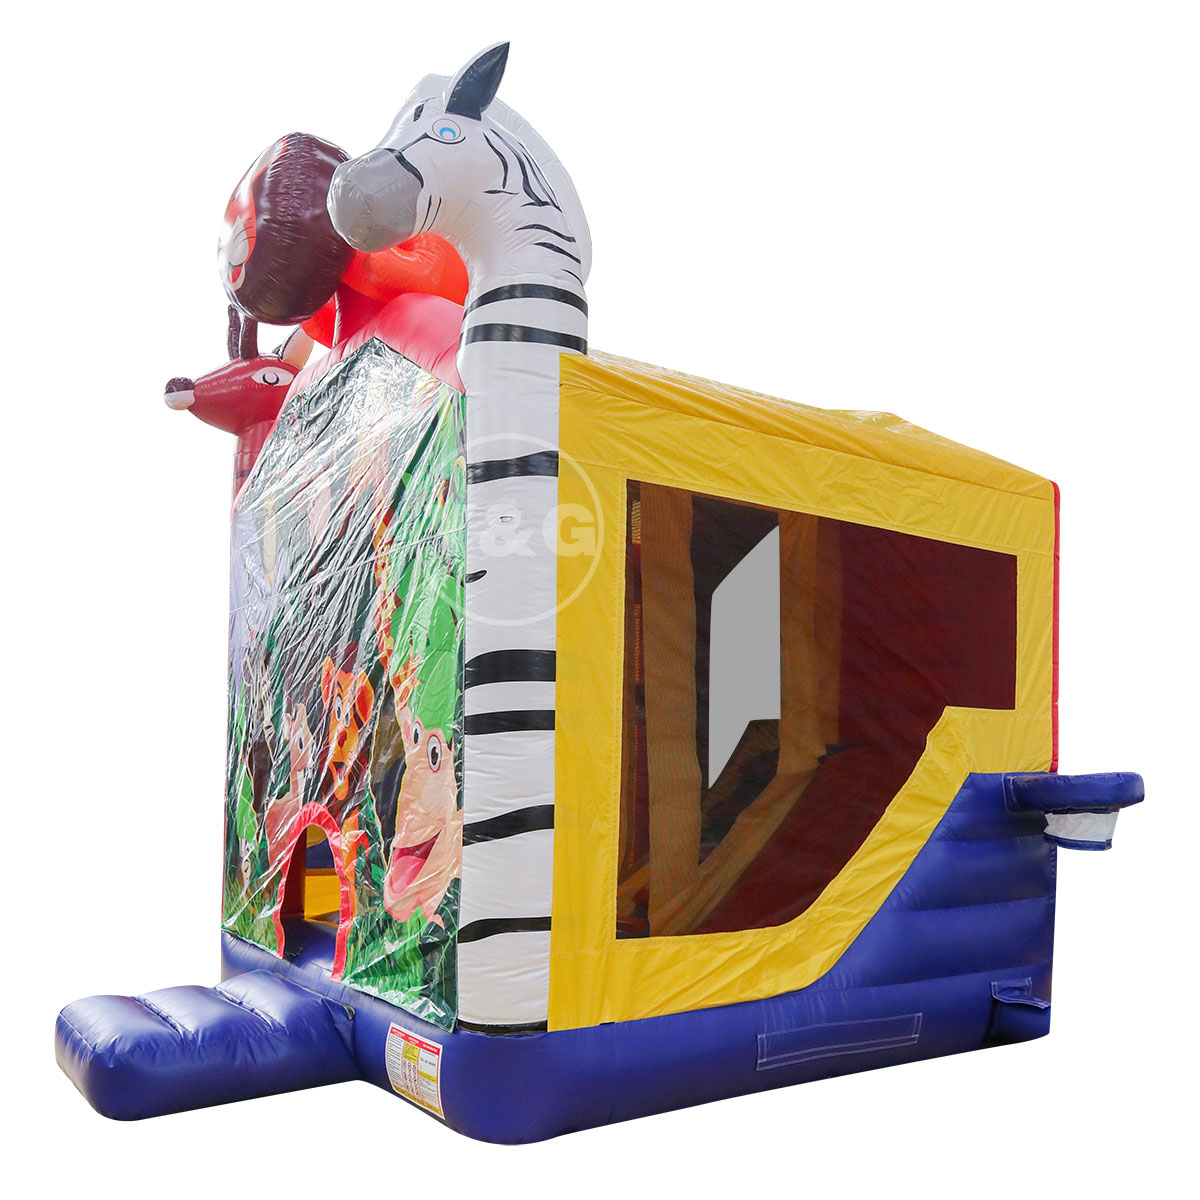 Inflatable Animal Kingdom Bounce HouseYG-147